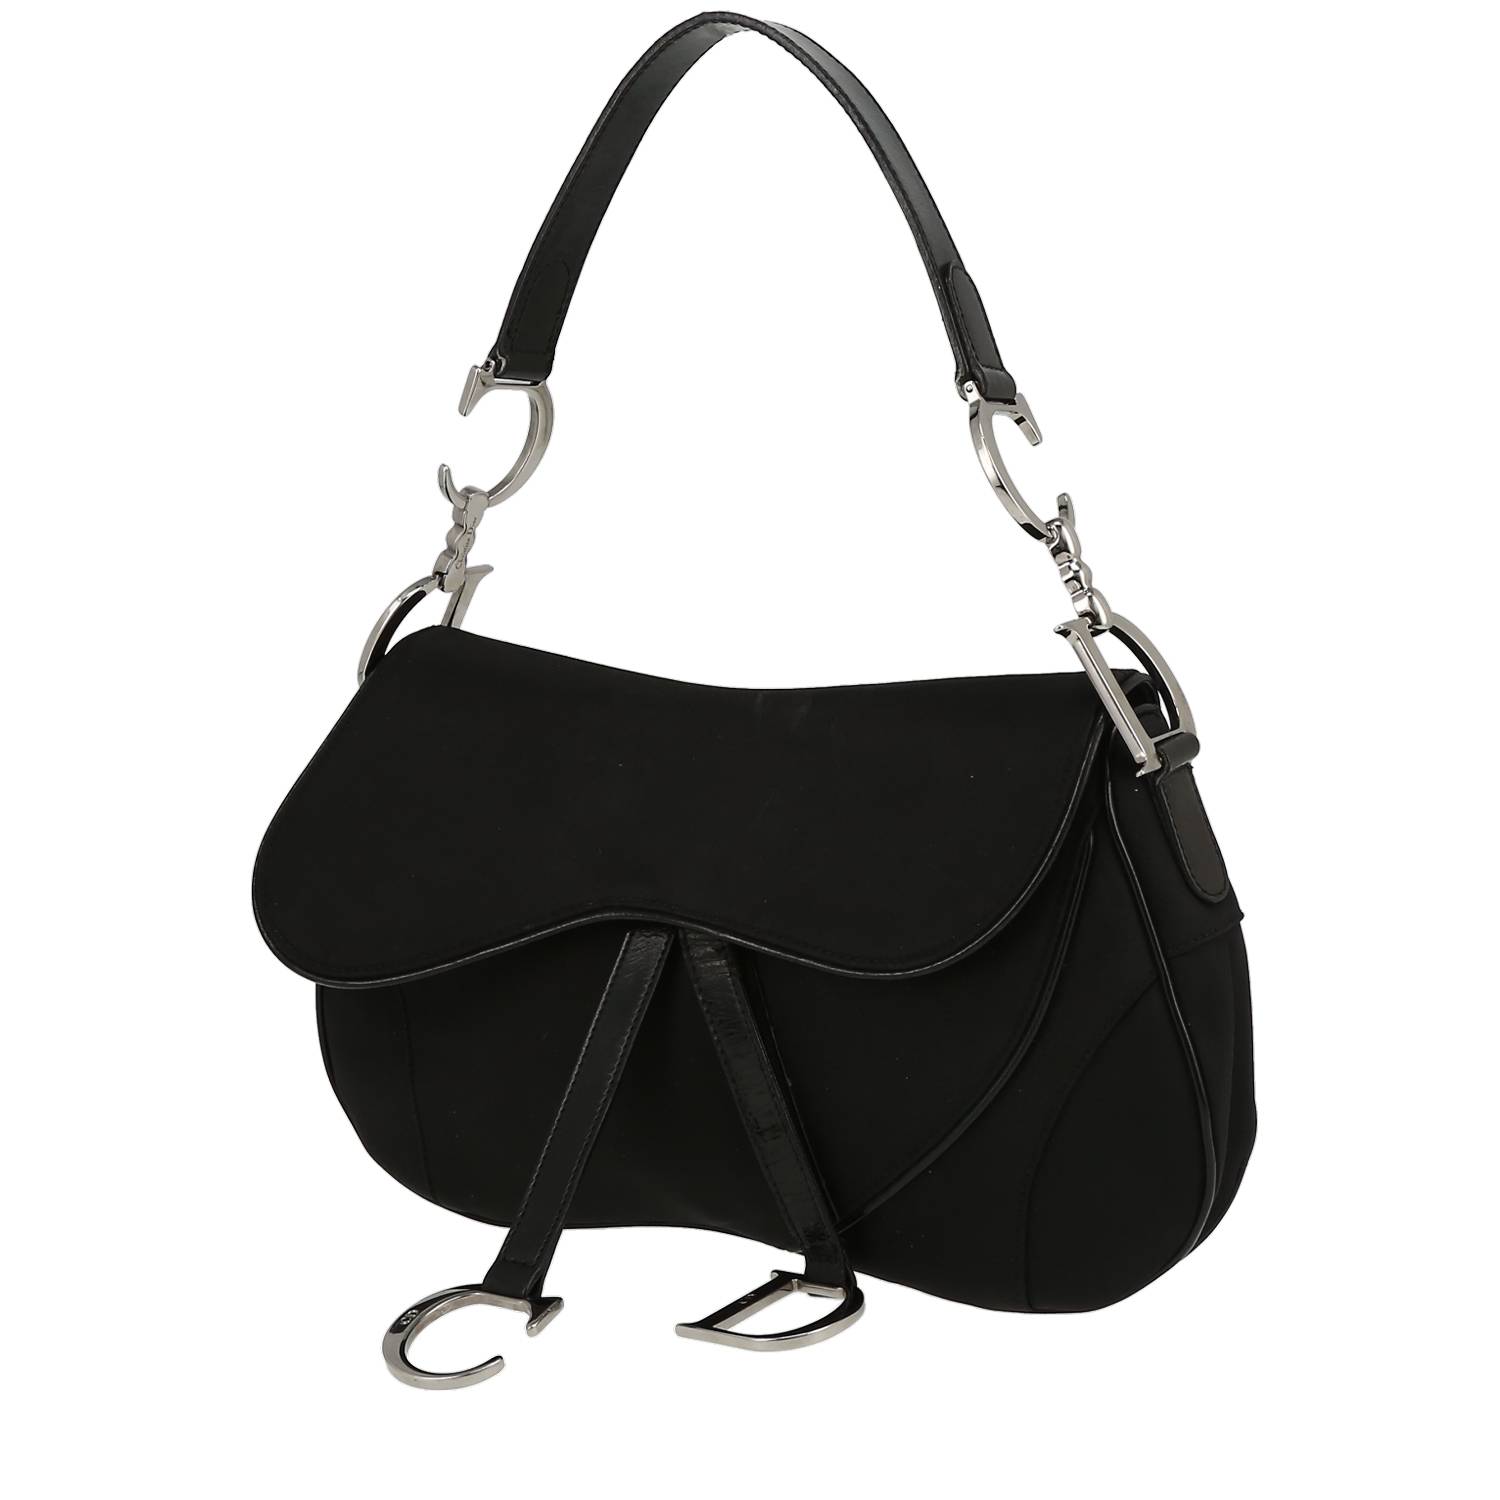 Saddle Handbag In Black Canvas And Black Patent Leather